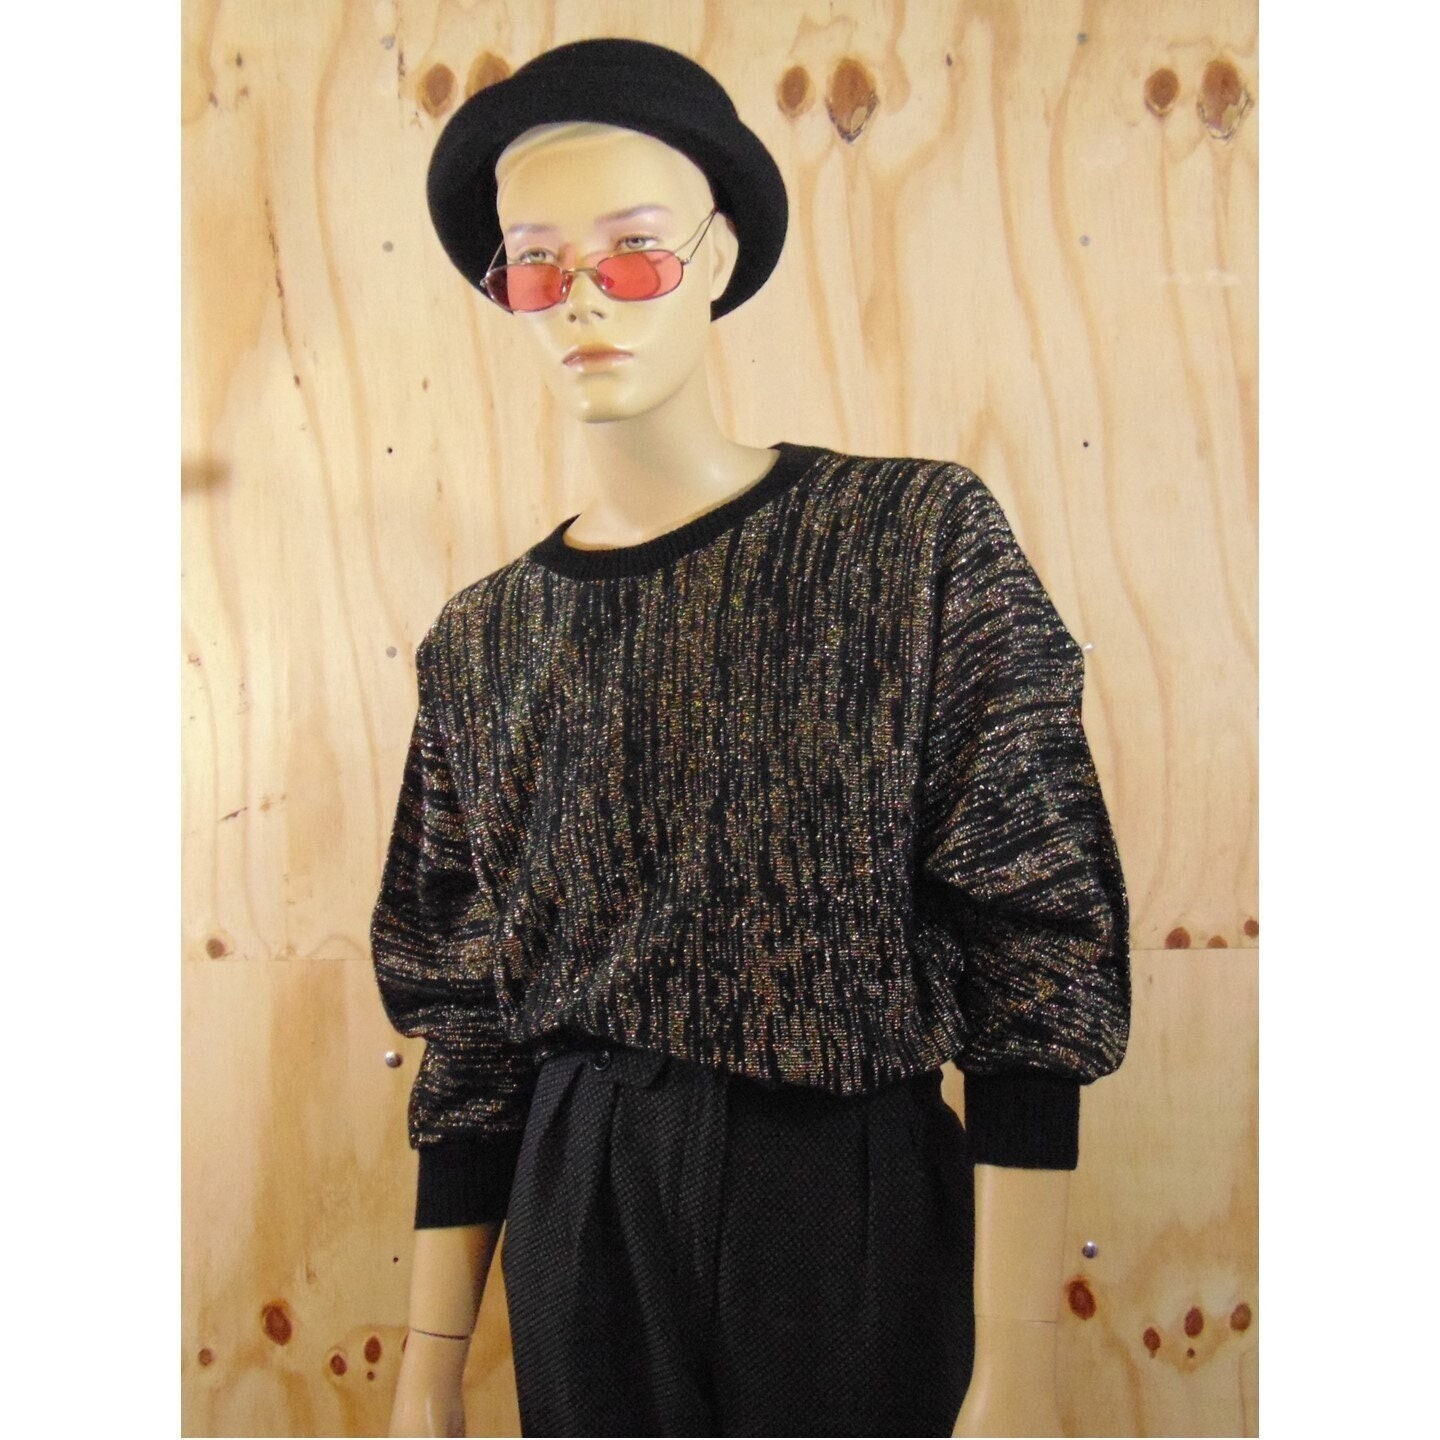 Kleding Dameskleding Sweaters Pullovers Vintage 80's gestreepte geribbelde gebreide trui retro kleur blokstreep V-hals trui wit ringershirt met lange mouwen lichtroze 